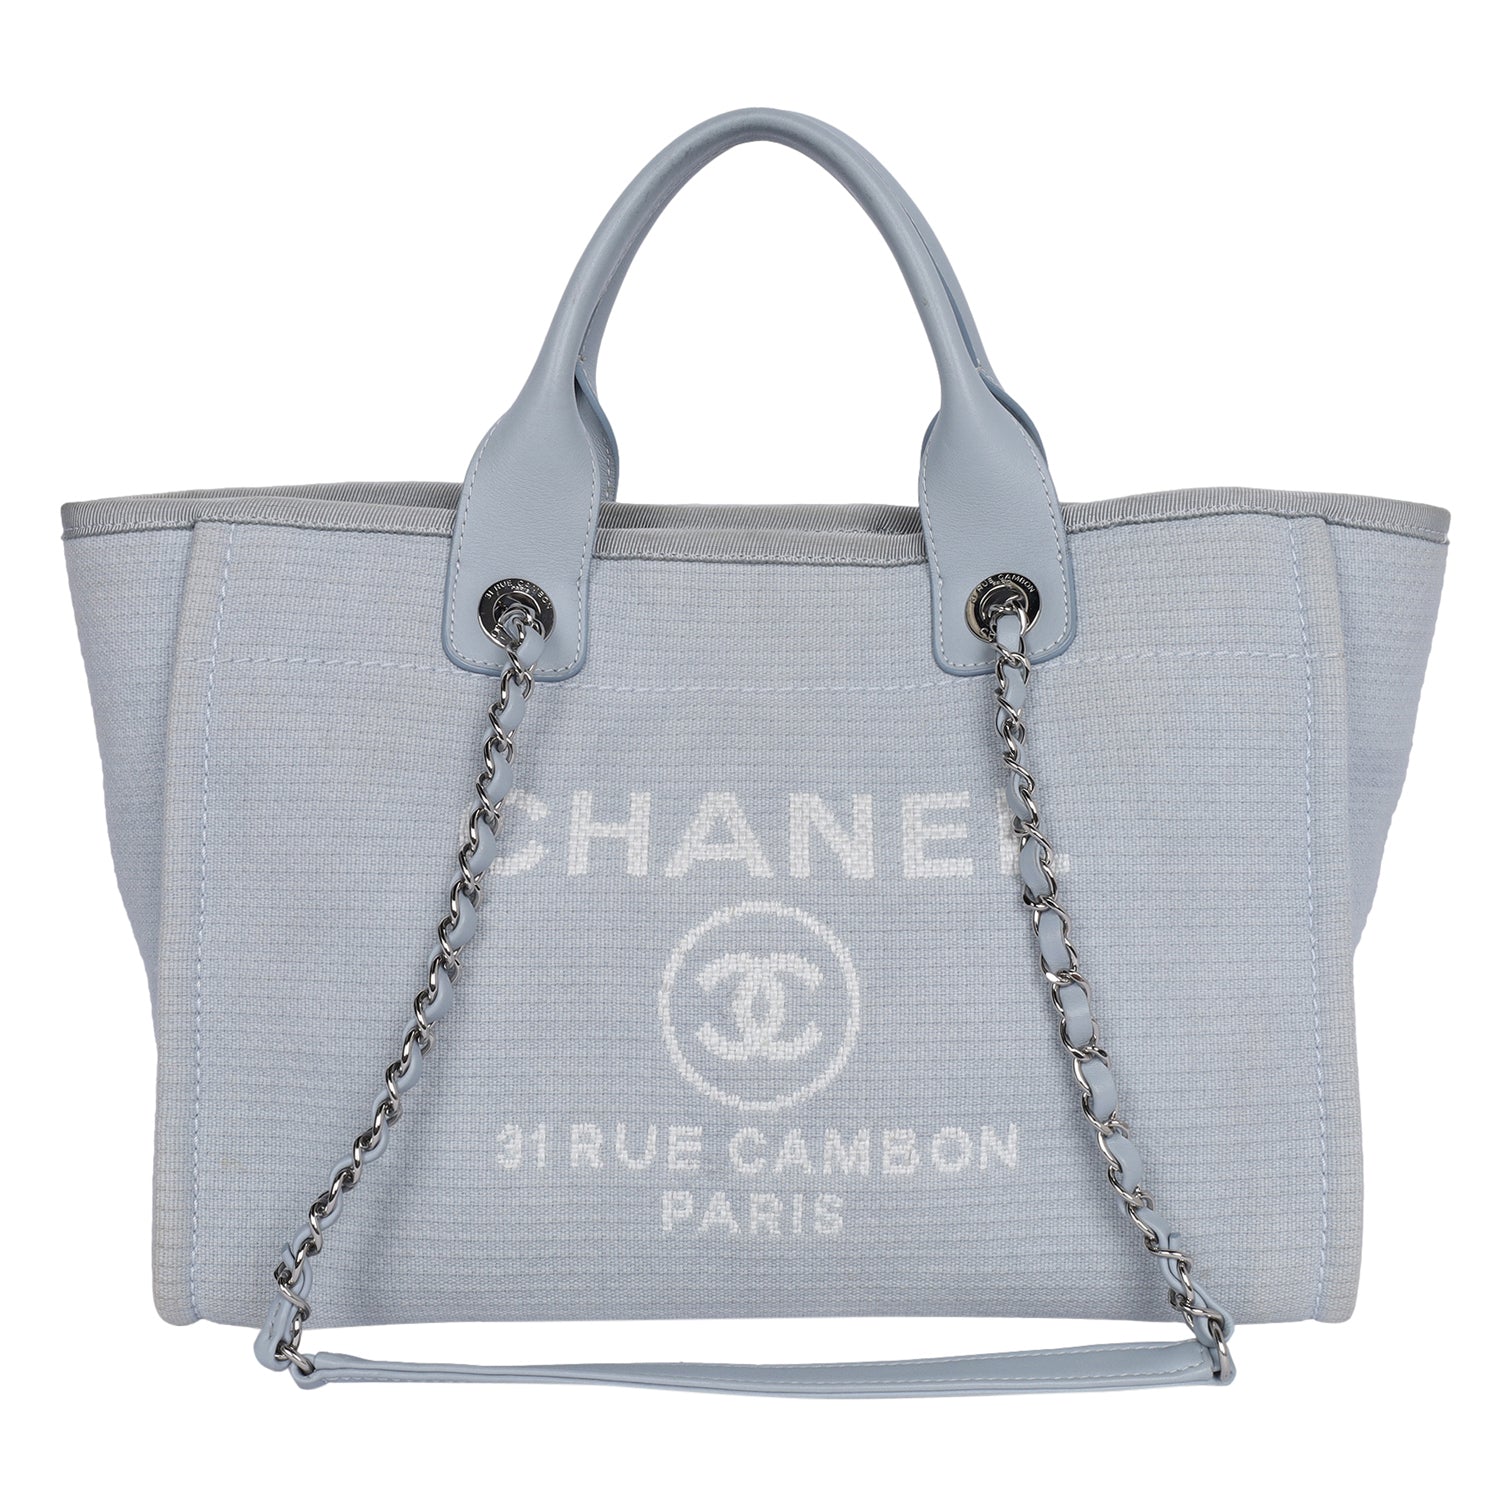 Chanel Medium Deauville Shopping Bag